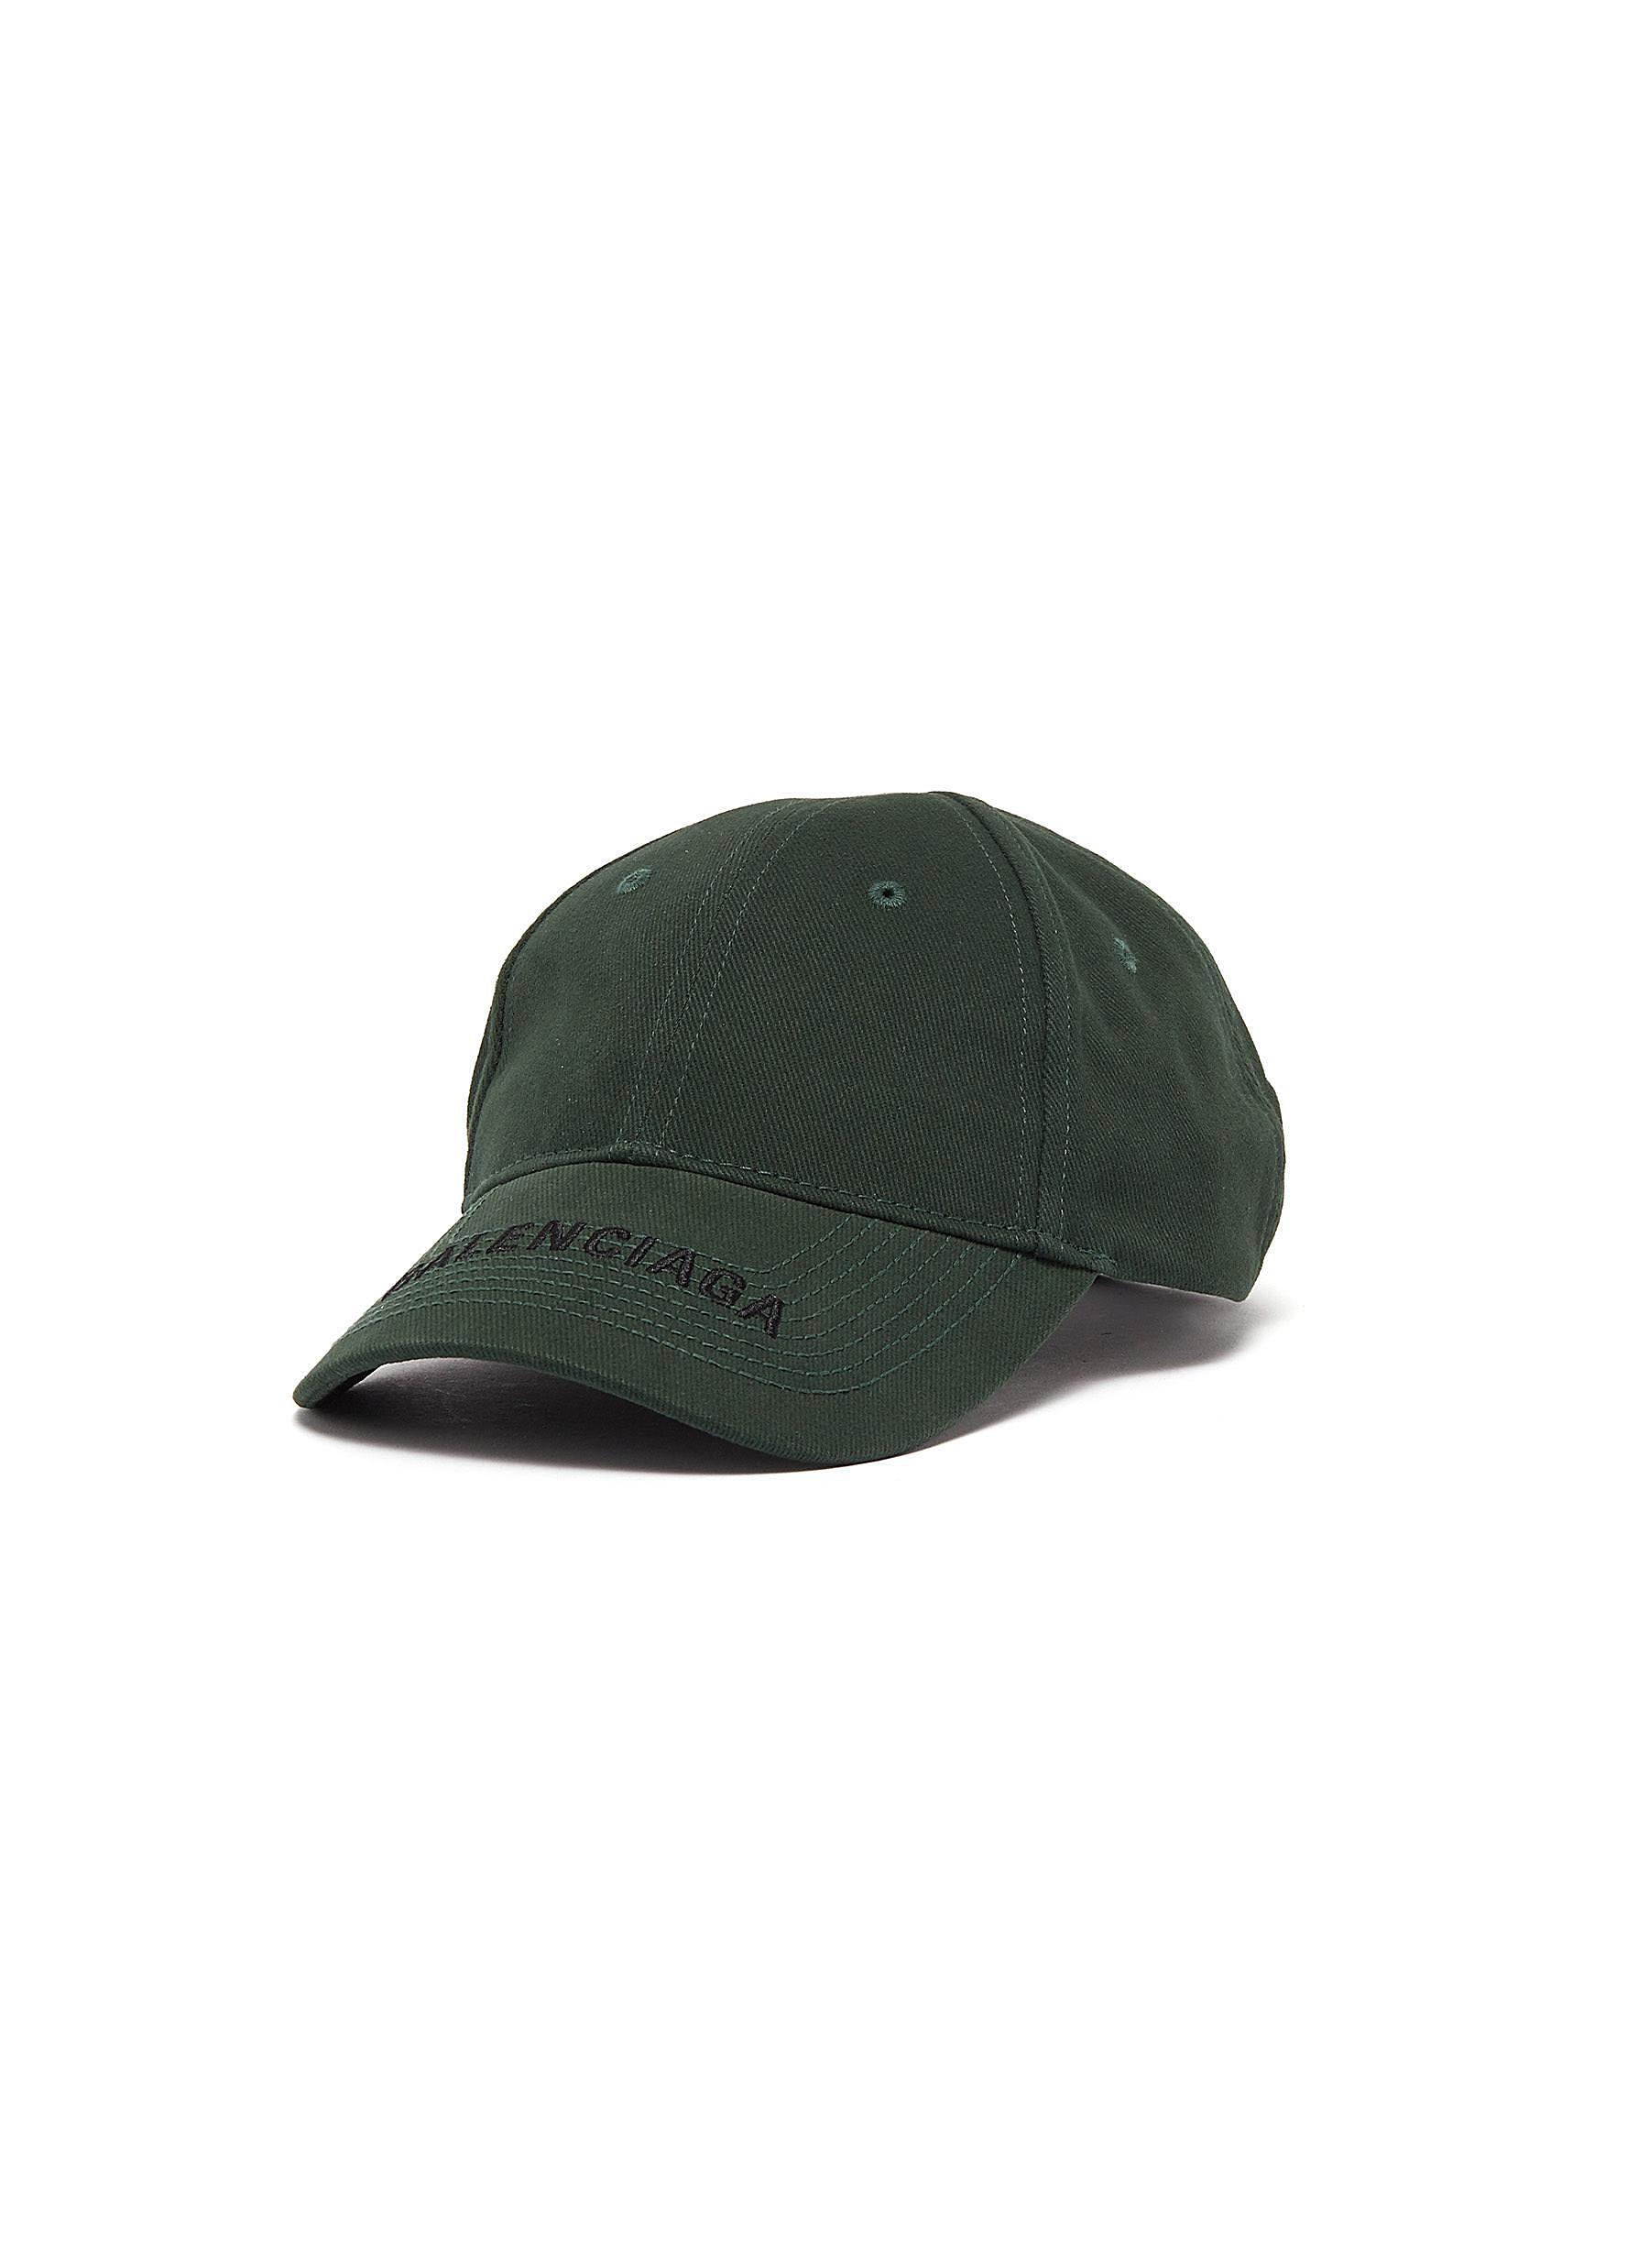 Heyin Men's Outdoor Hats Spring And Summer Hats Fisherman Hats Fishing Hats Green